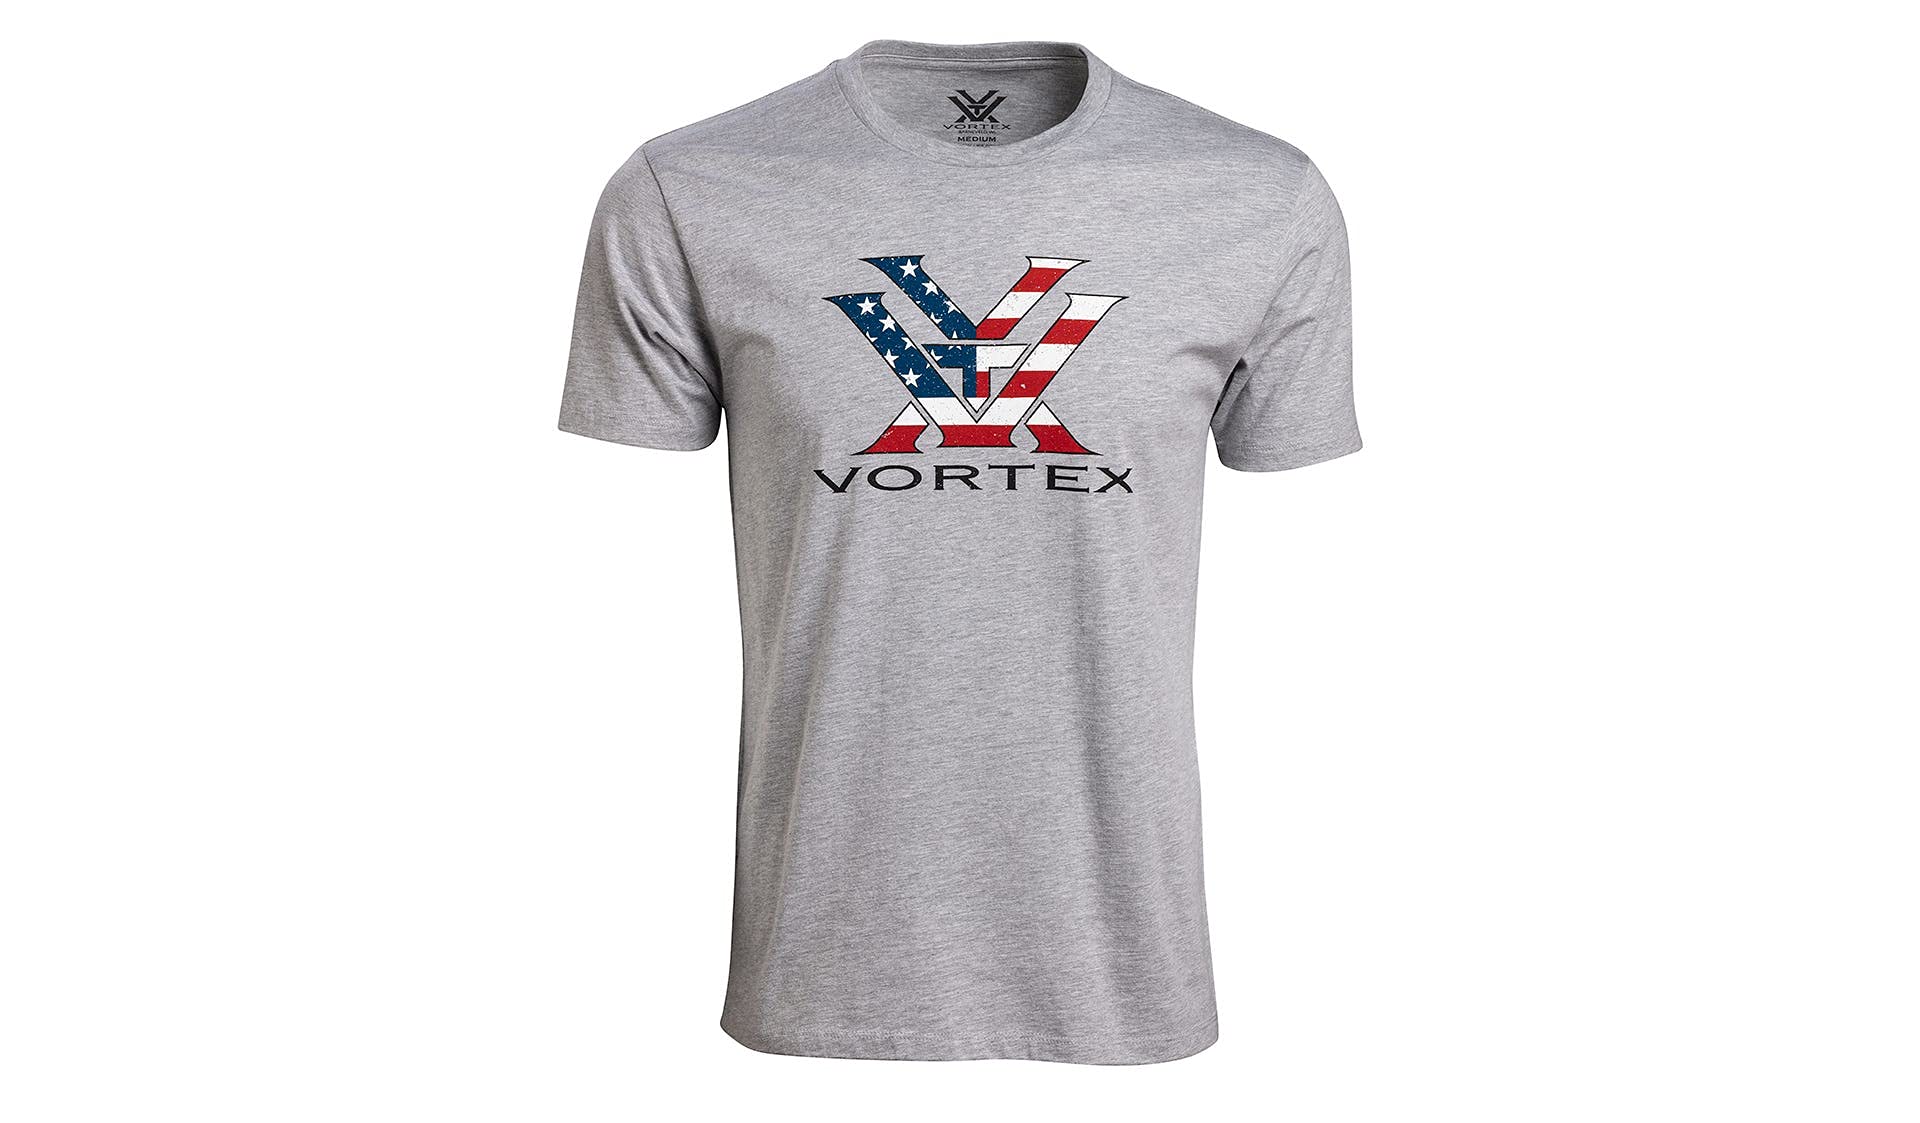 Vortex Men's Stars and Bars Shirt, Grey, Small